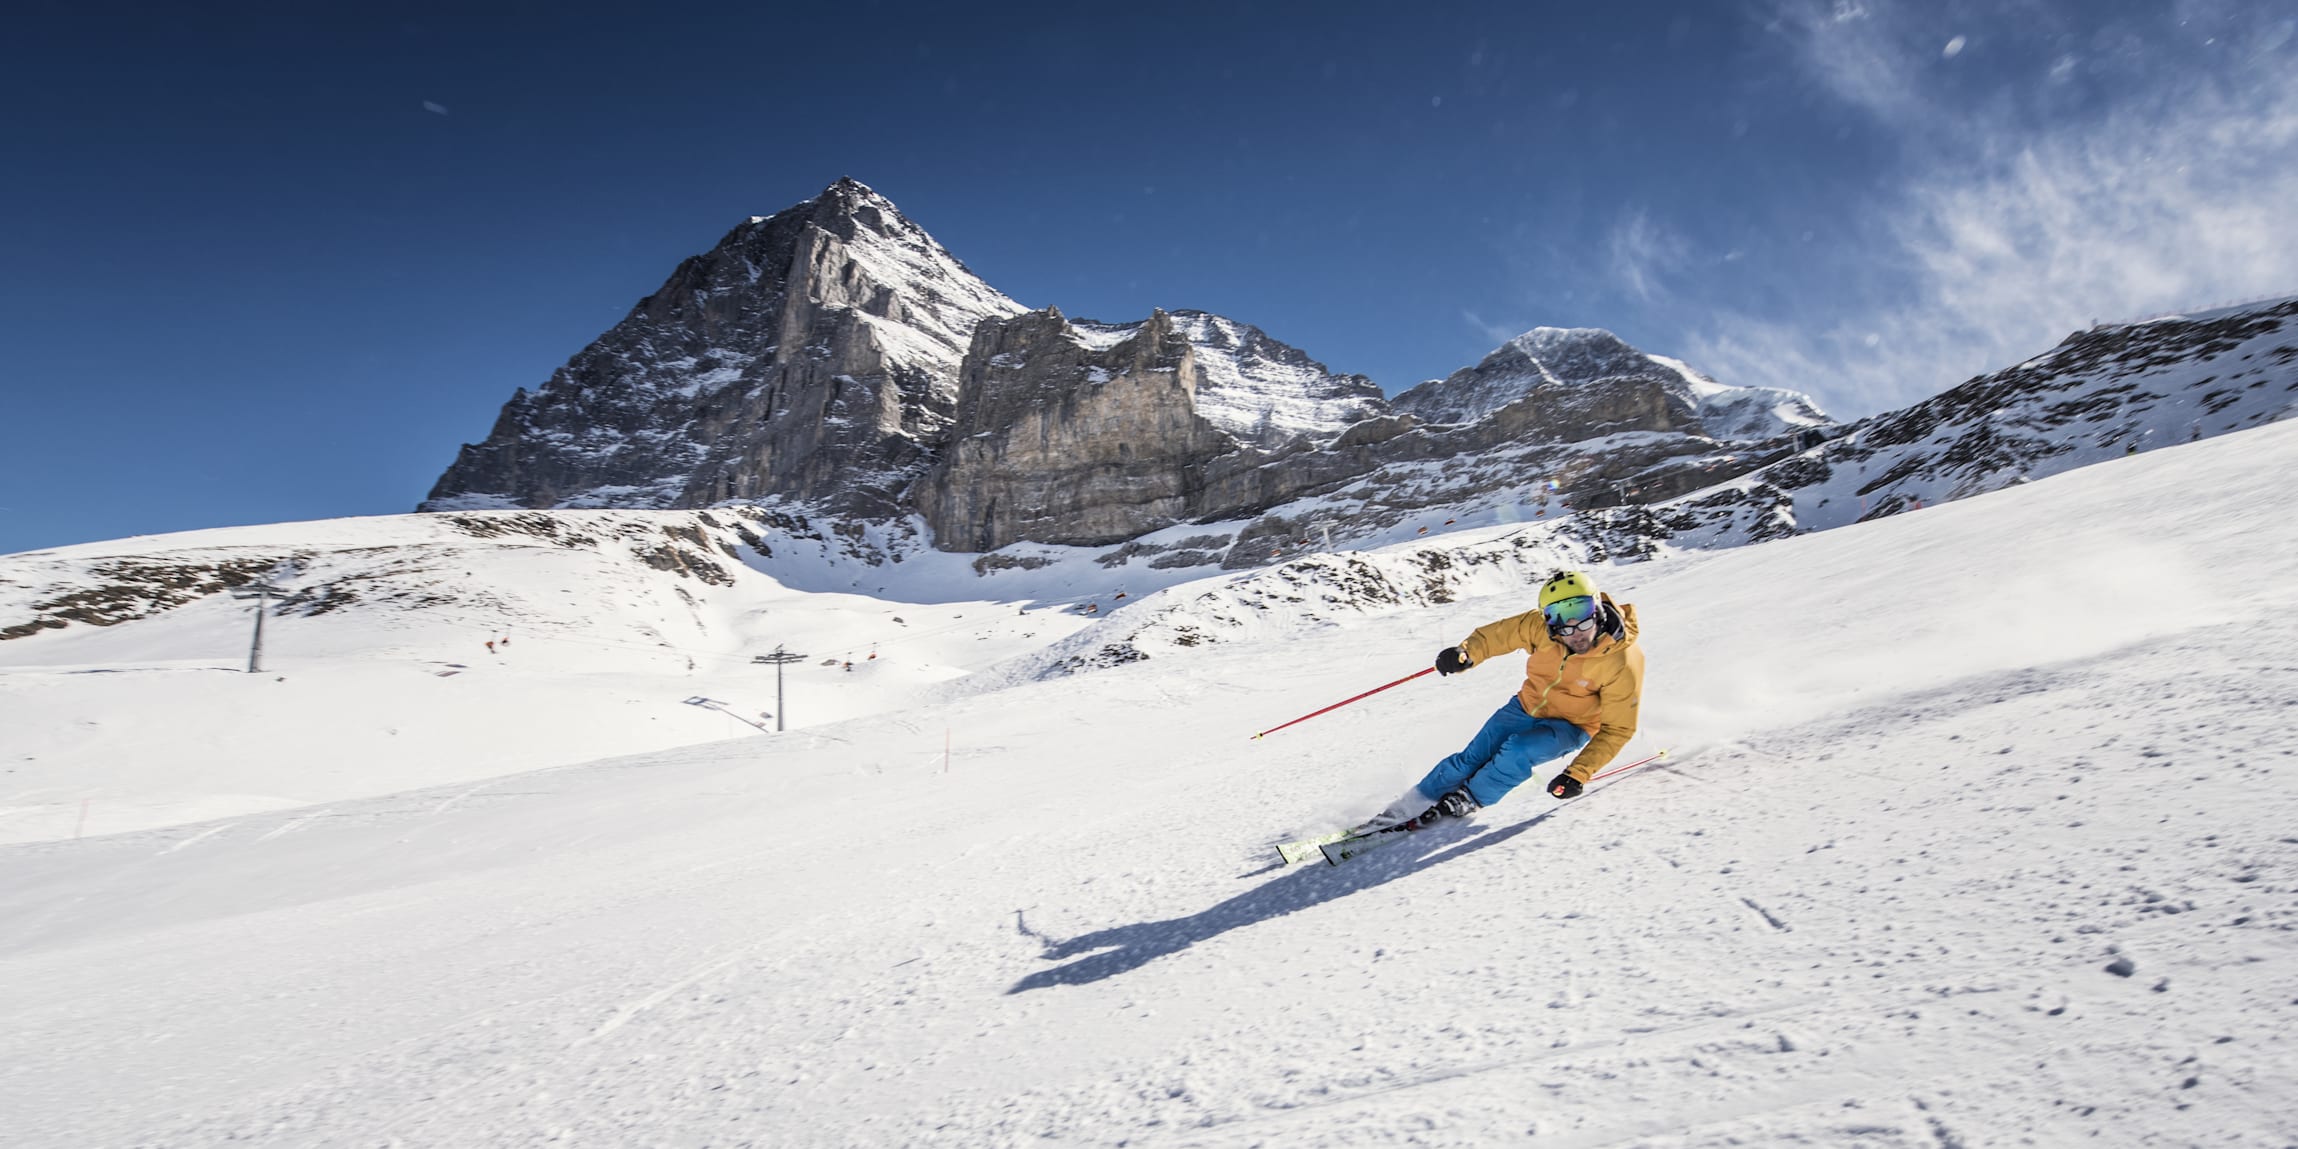 Jungfrau Ski Region Skiing Piste Snow Eiger